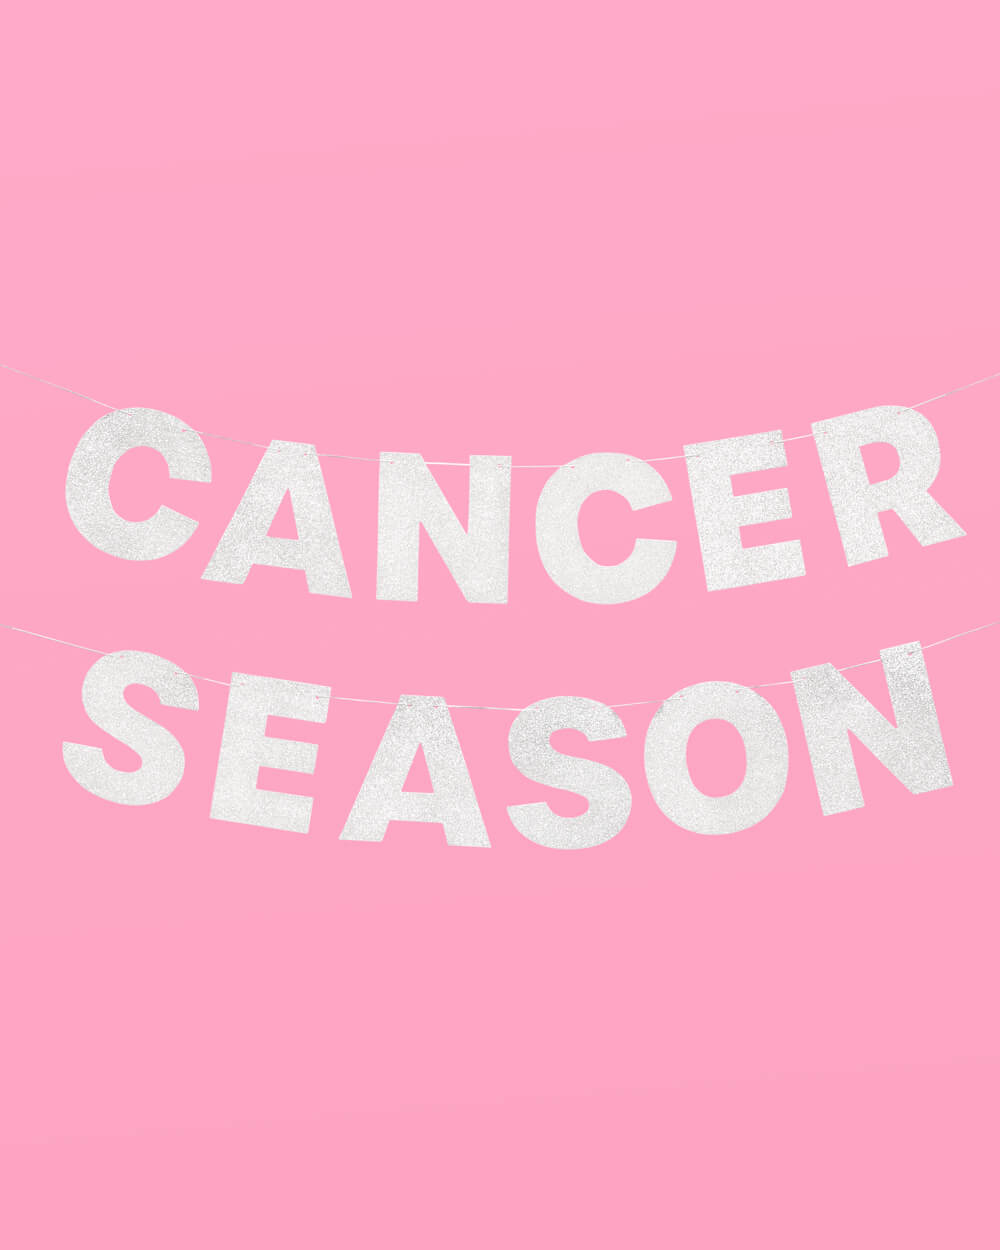 Cancer Season Banner - silver glitter banner